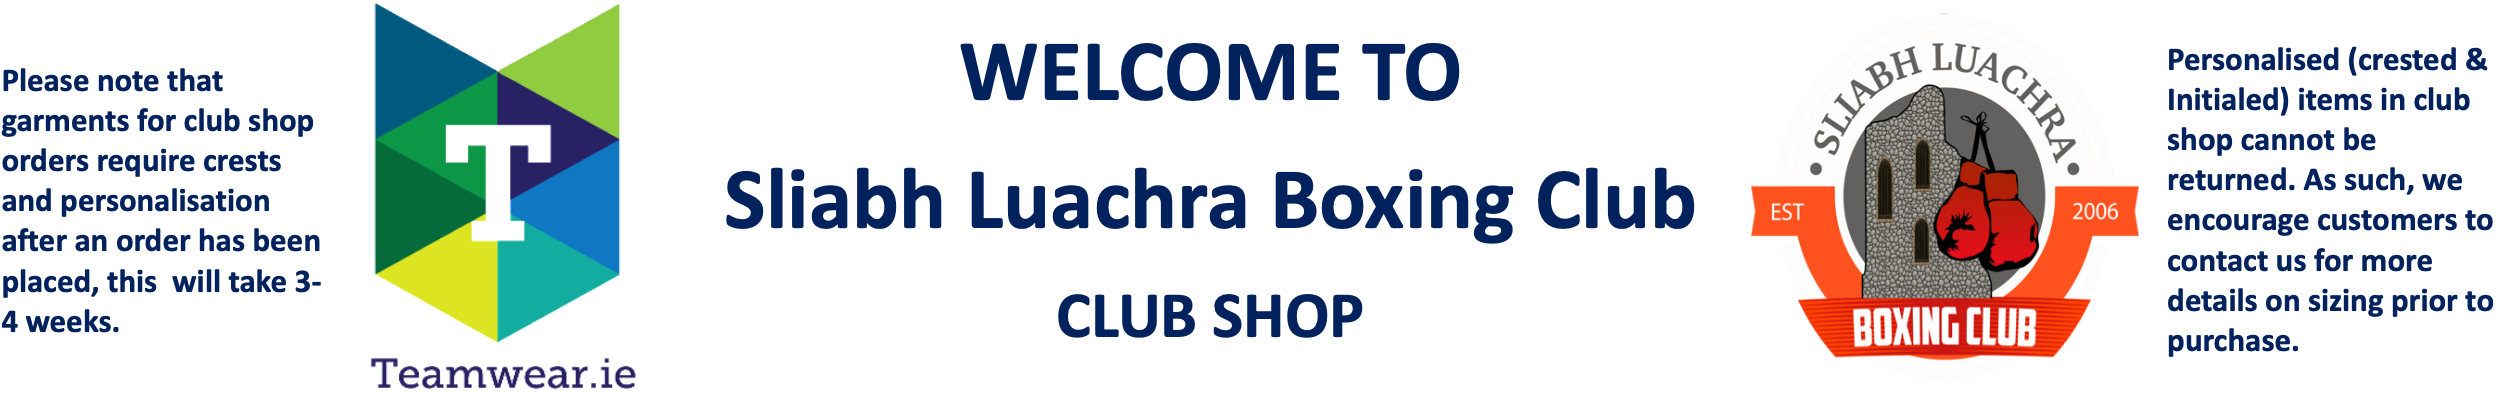 Sliabh Luachra Boxing Club